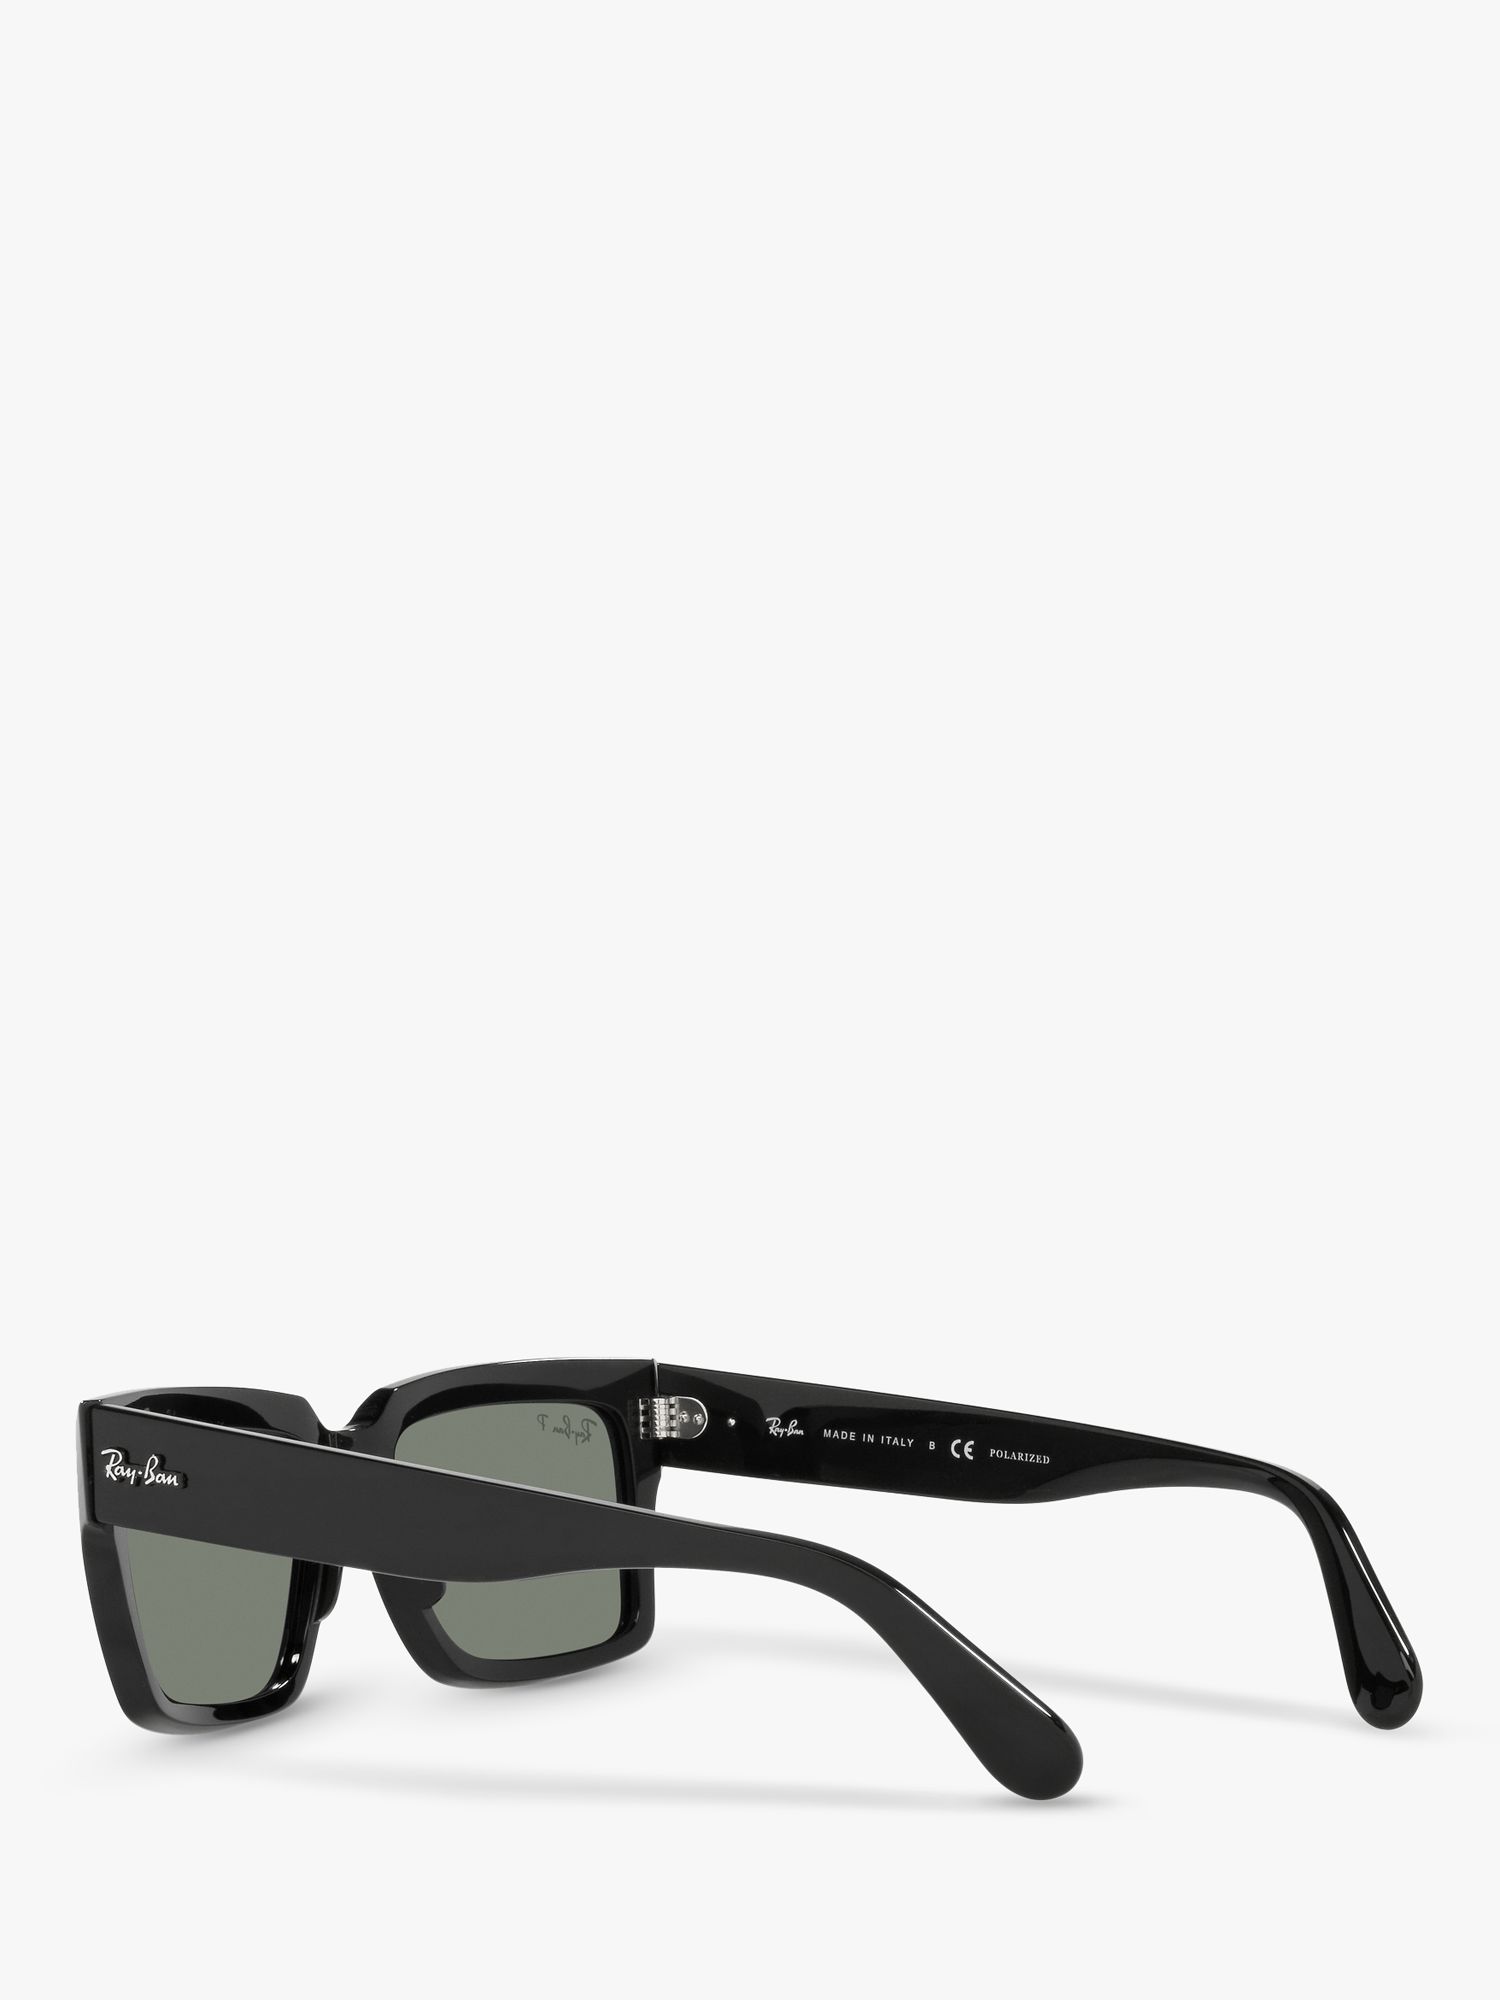 Ray-Ban RB2191 Unisex Polarised Pillow Shape Sunglasses, Black